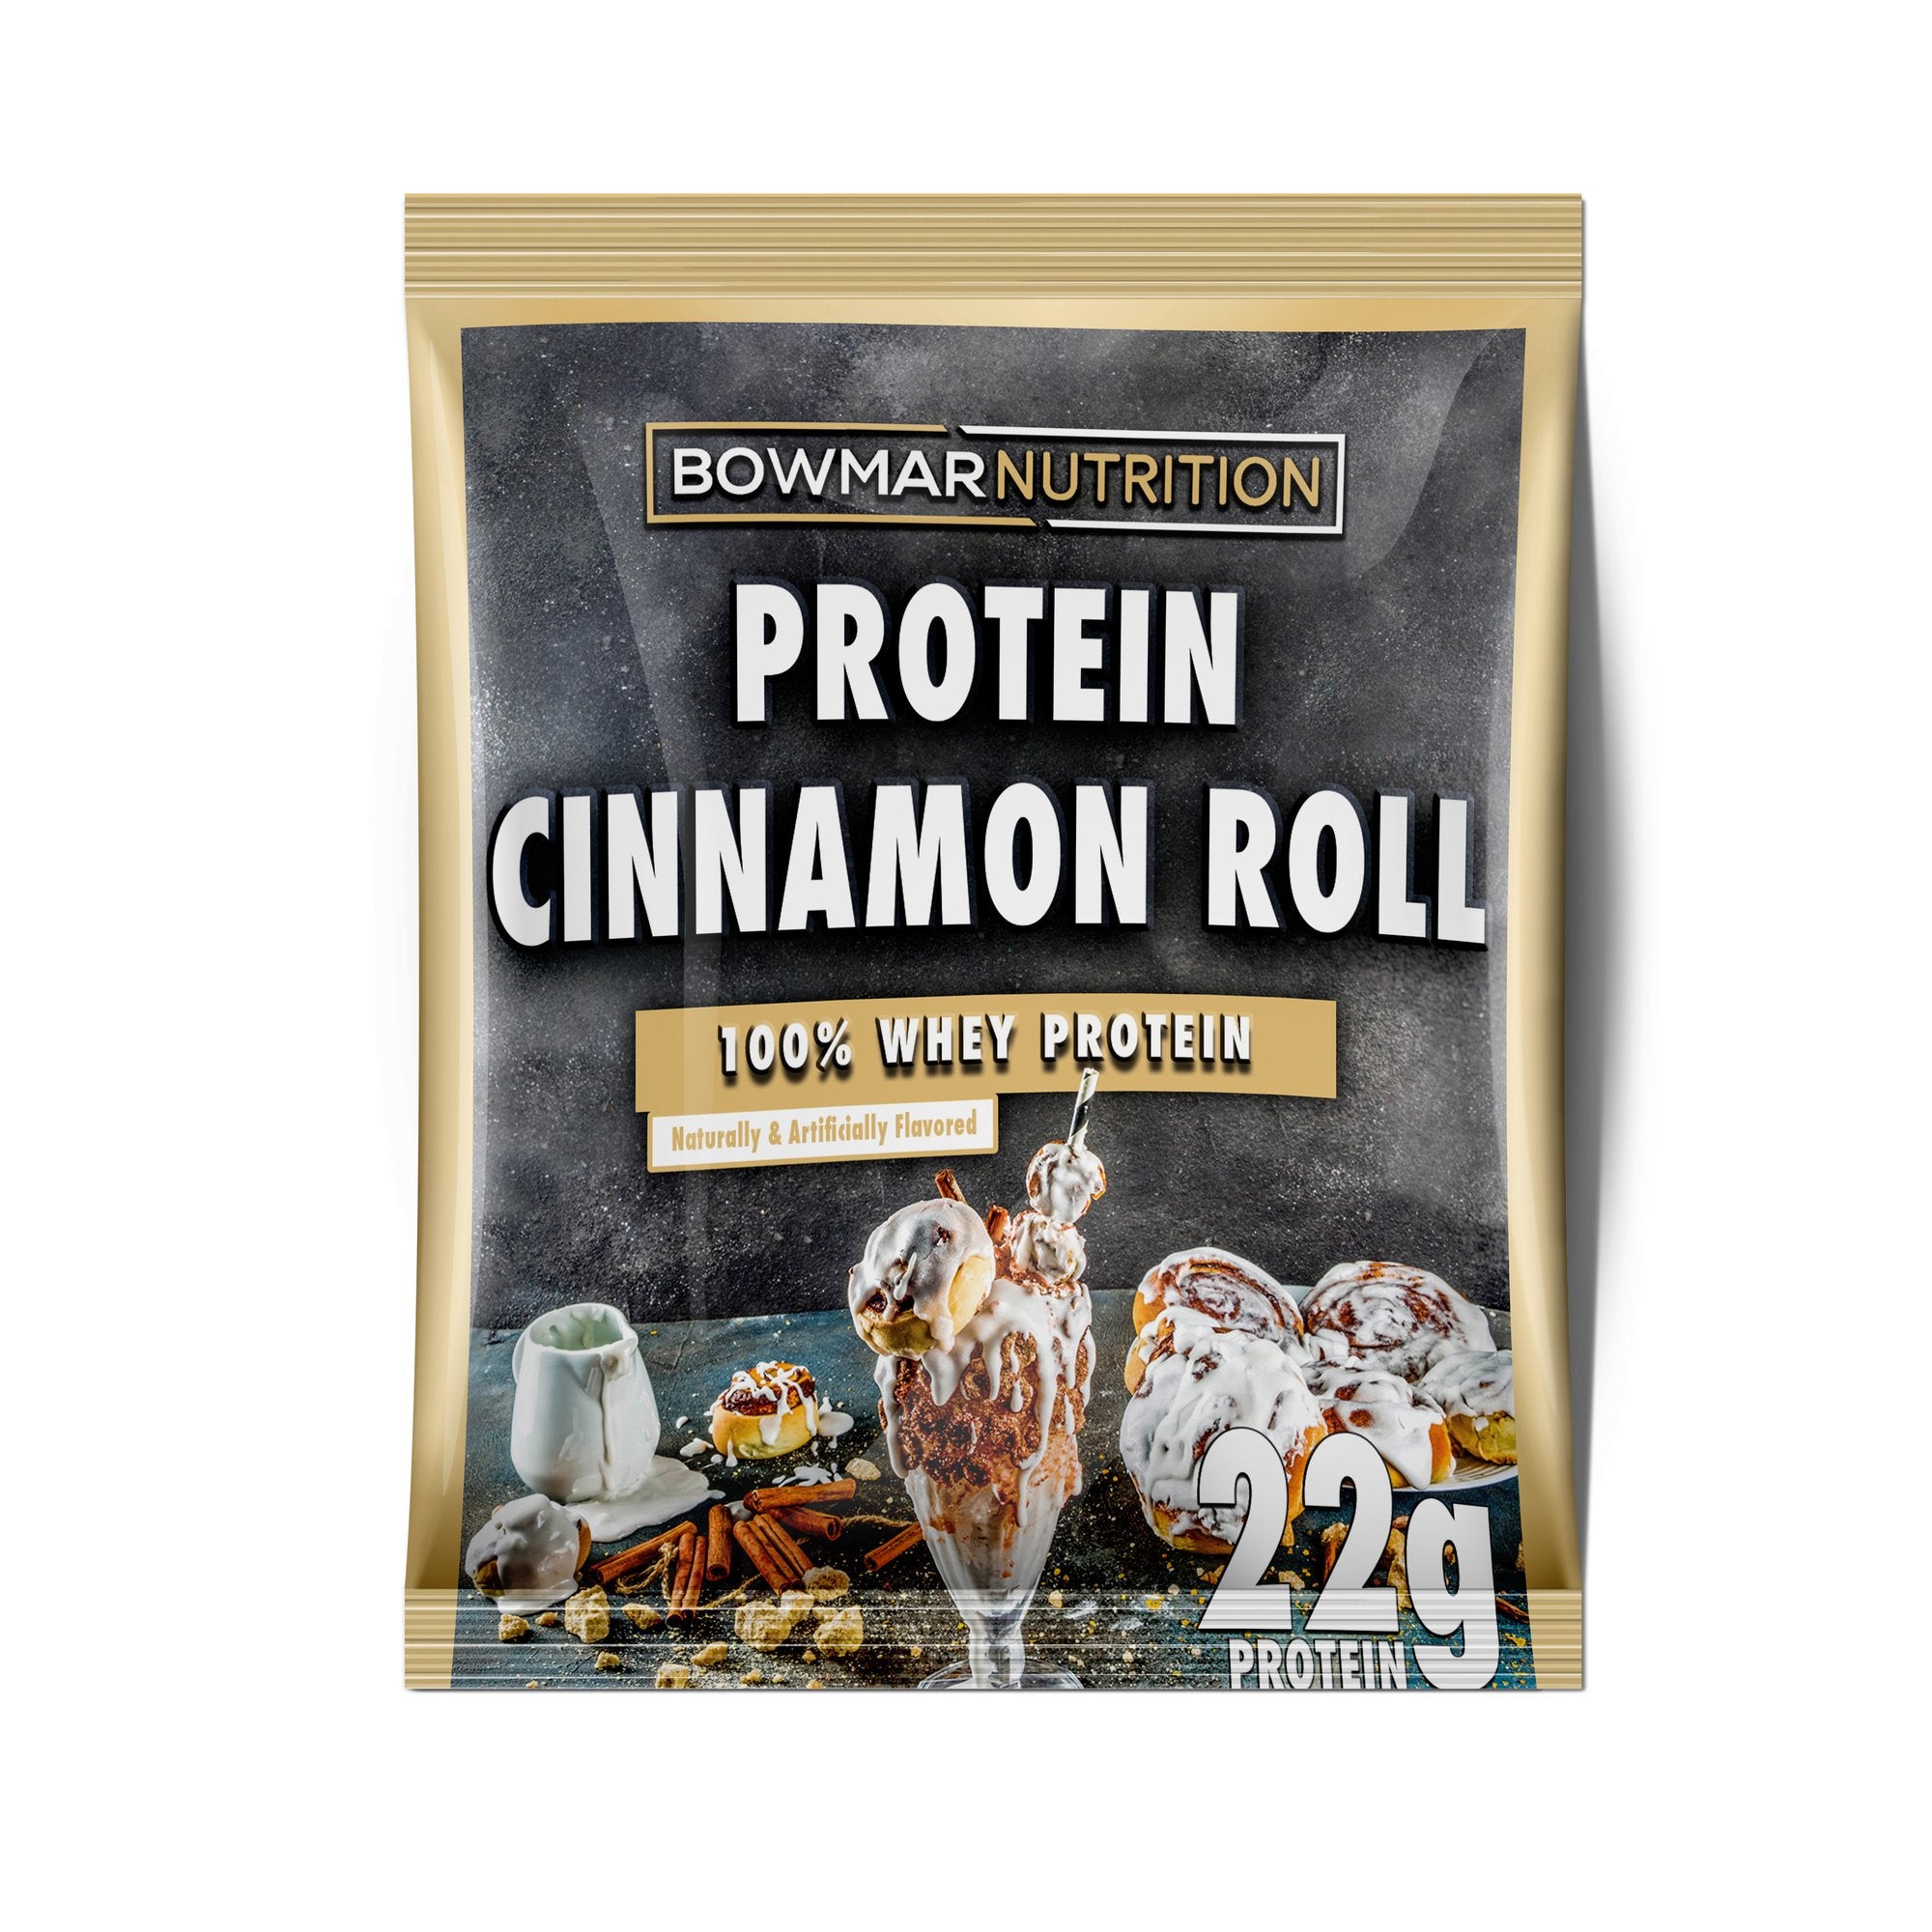 Bowmar Whey Protein Powder Sample (1 serving) bowmar-protein-powder-sachet-1-packet Protein Snacks Cinnamon Roll bowmar